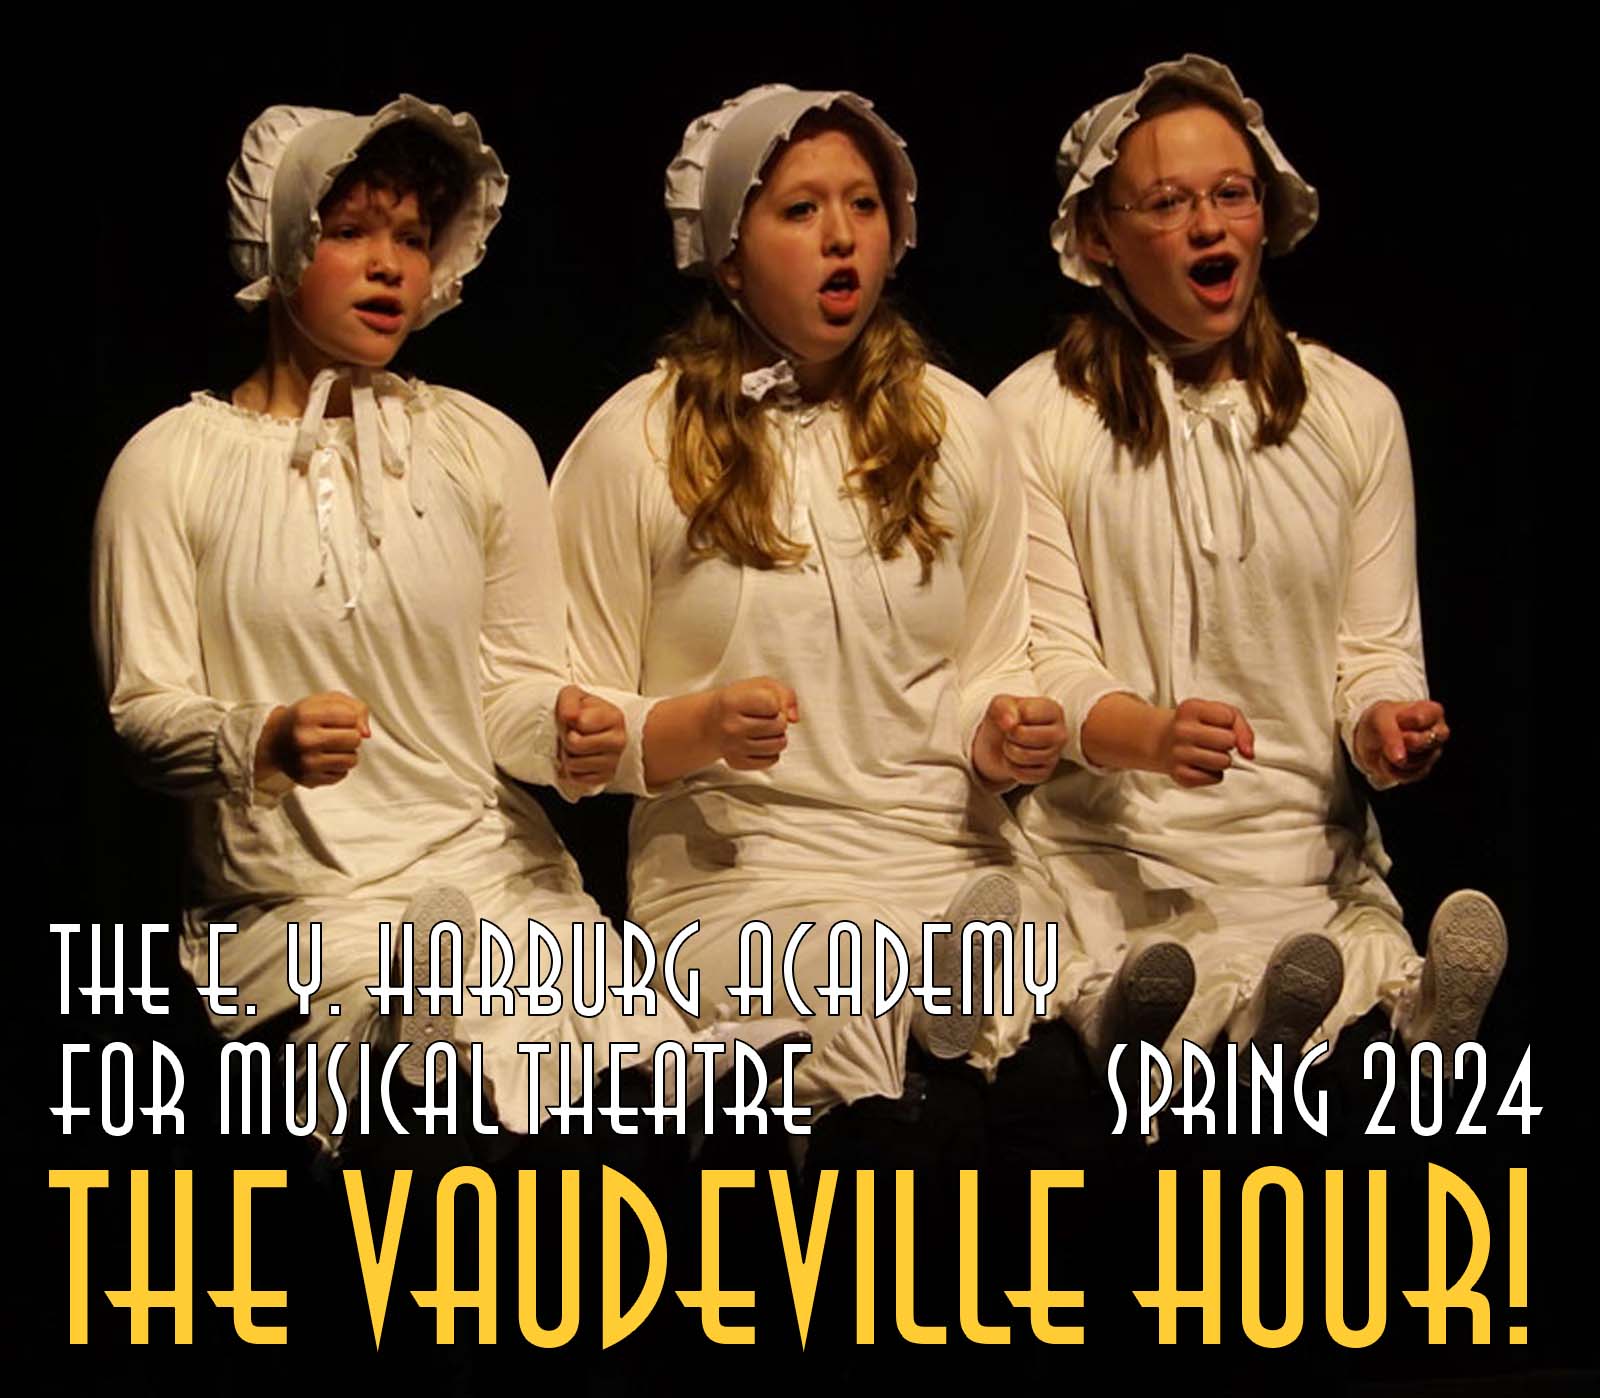 VaudevilleHour-2024 Spring-1